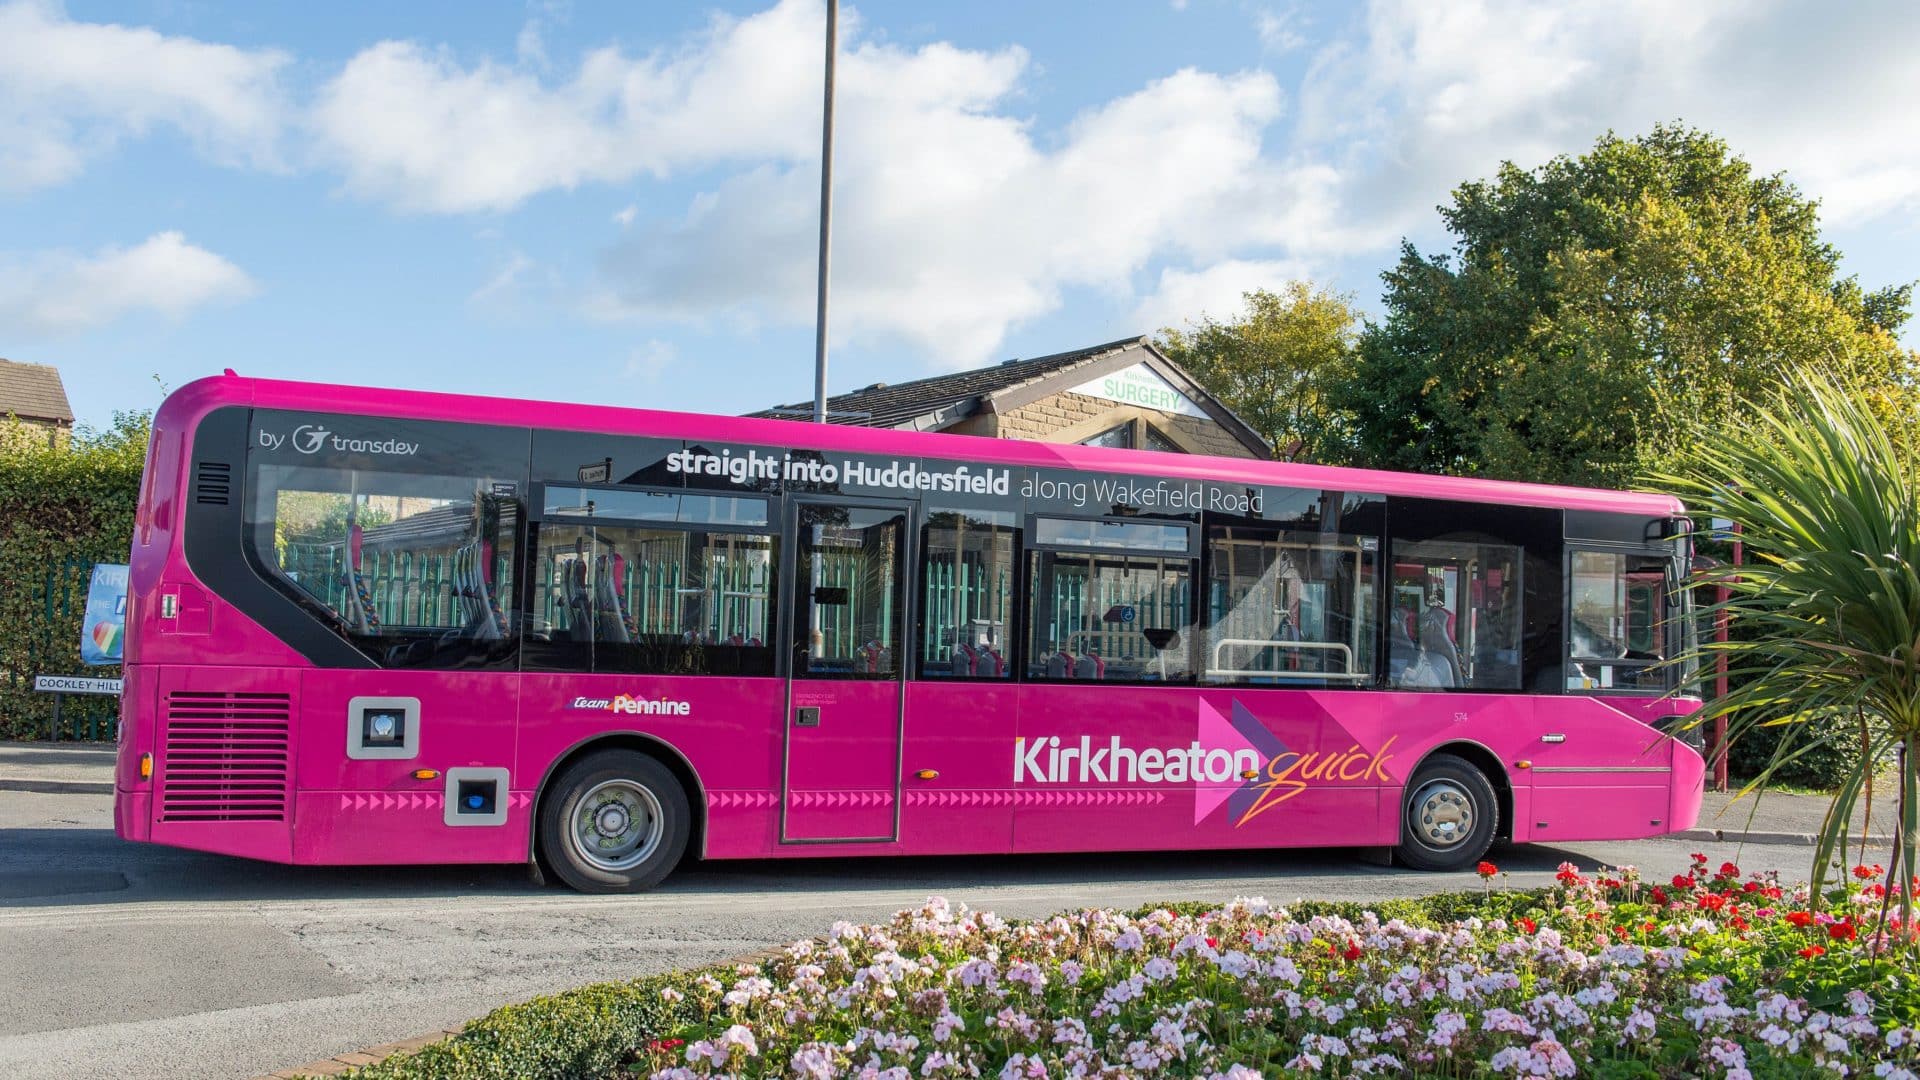 A bright pink Team Pennine bus